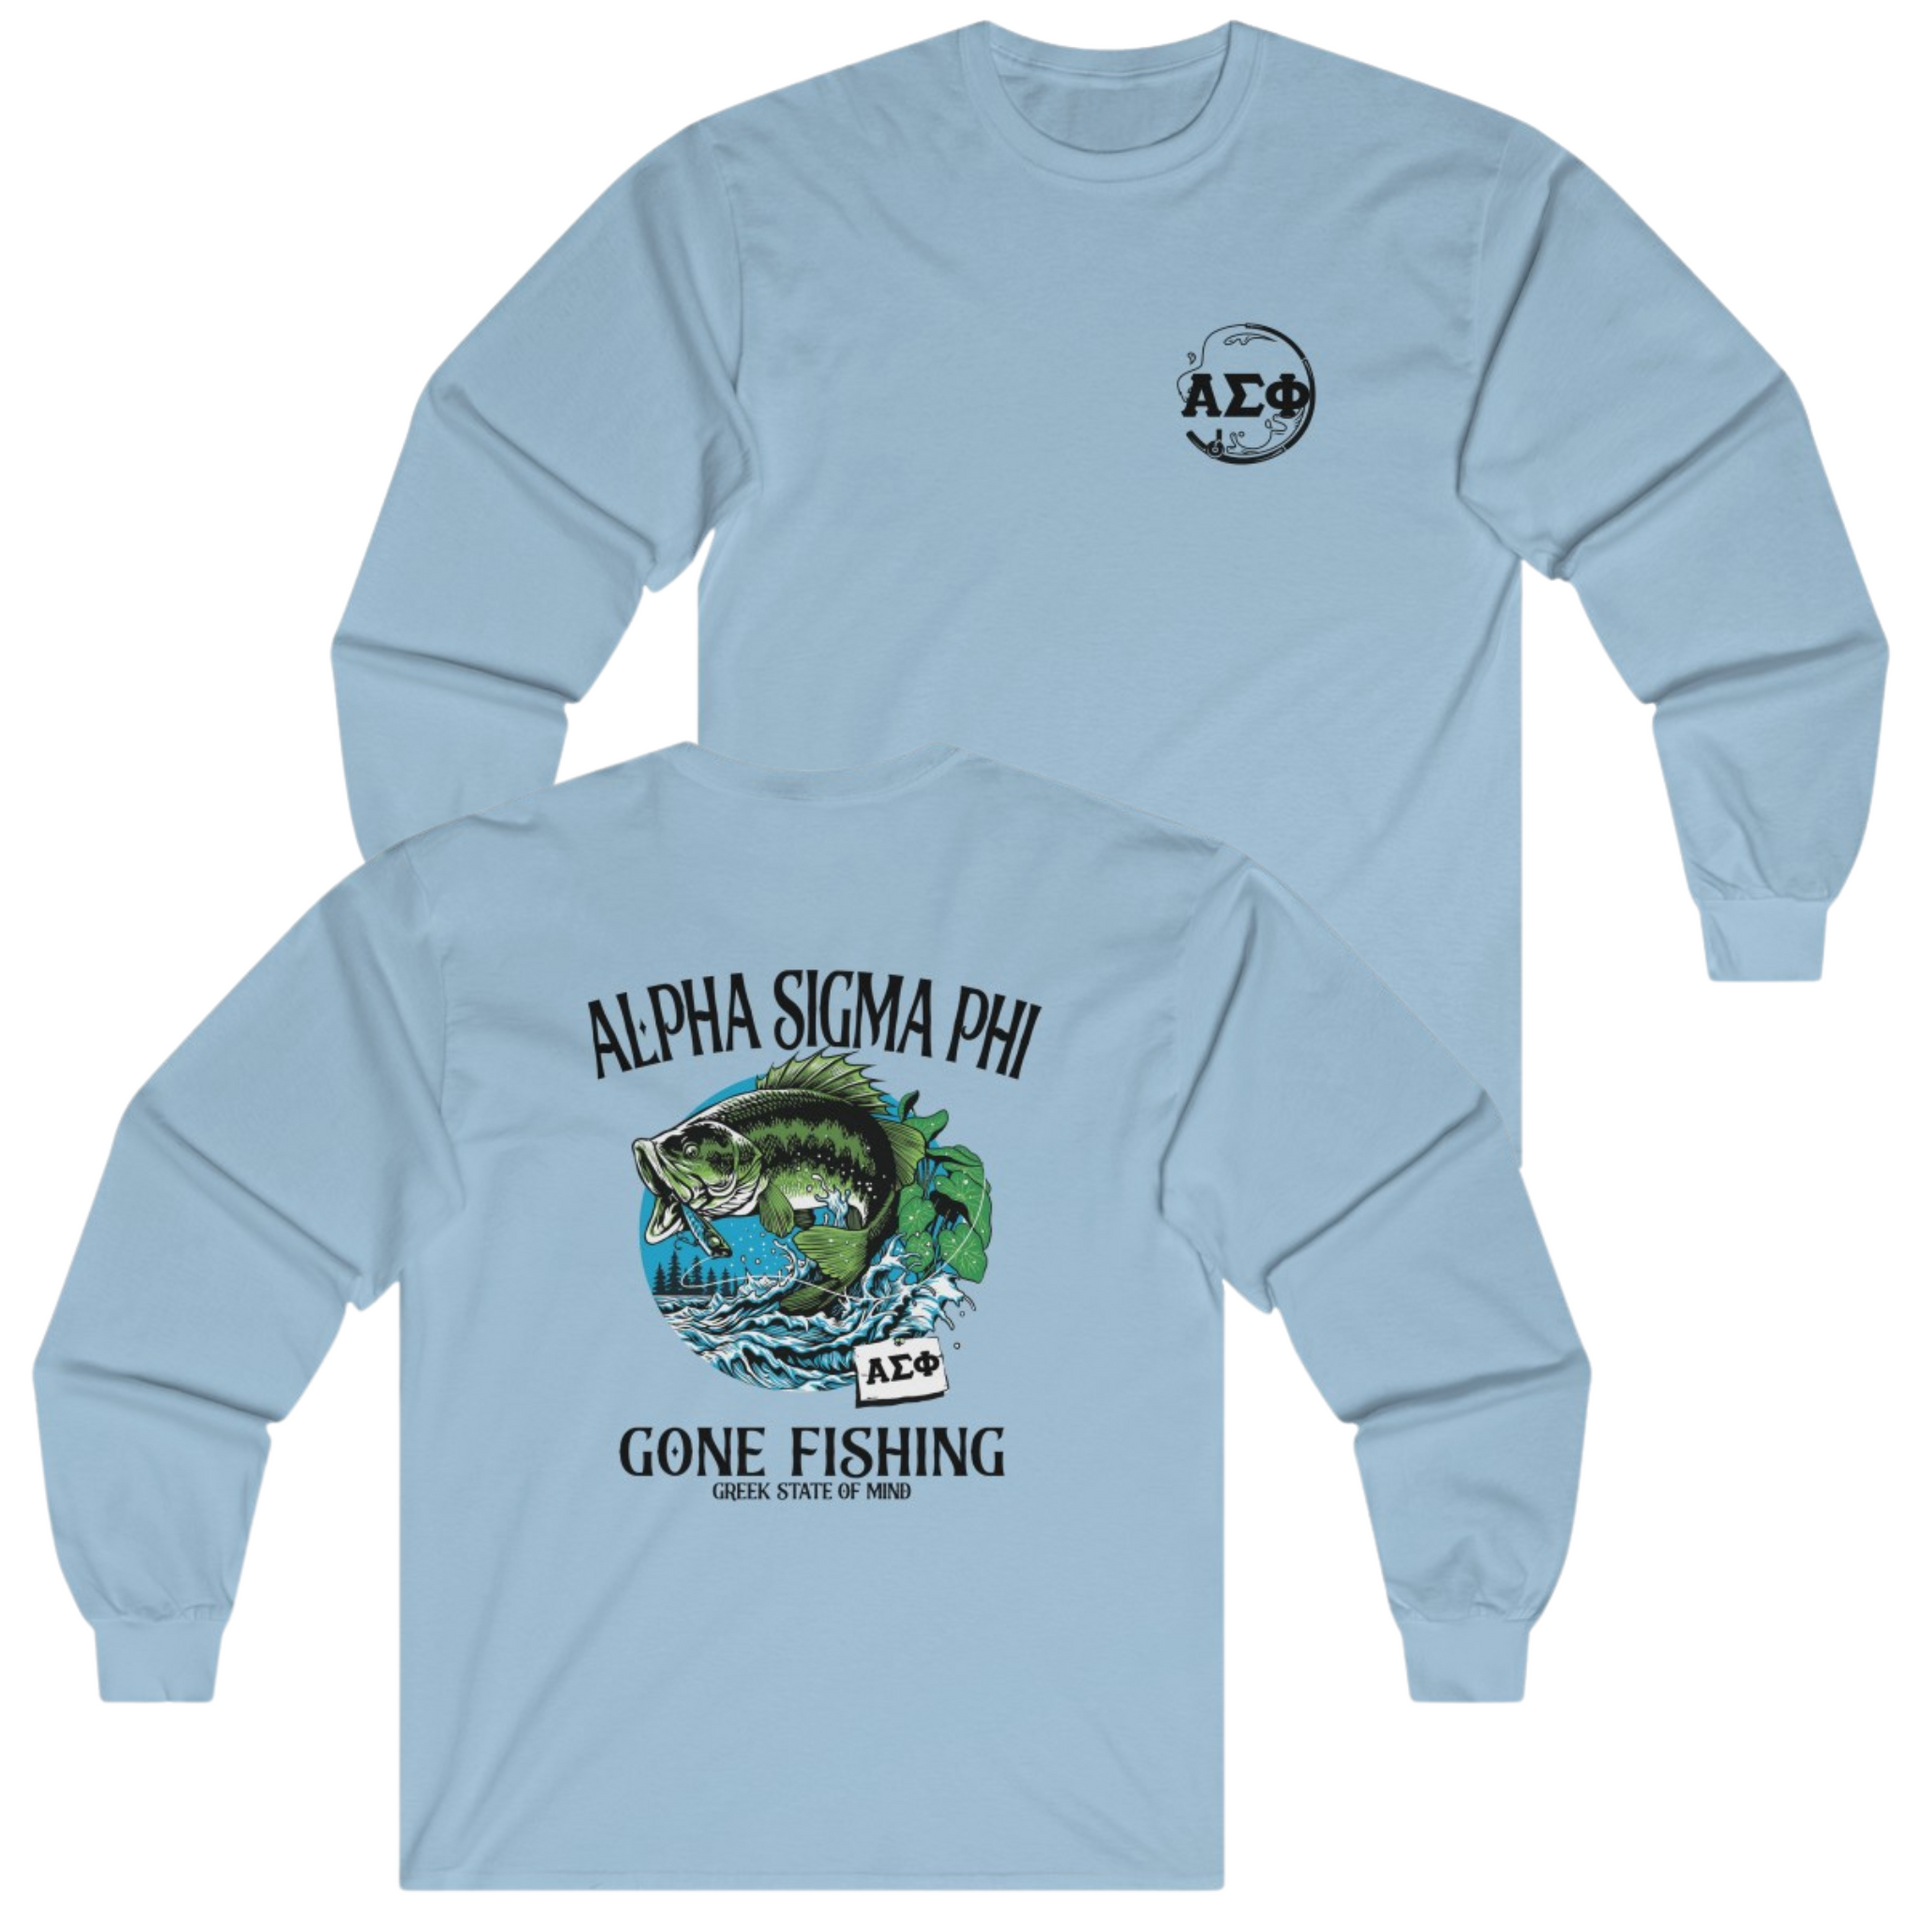 Light Blue Alpha Sigma Phi Graphic Long Sleeve T-Shirt | Gone Fishing | Fraternity Shirt